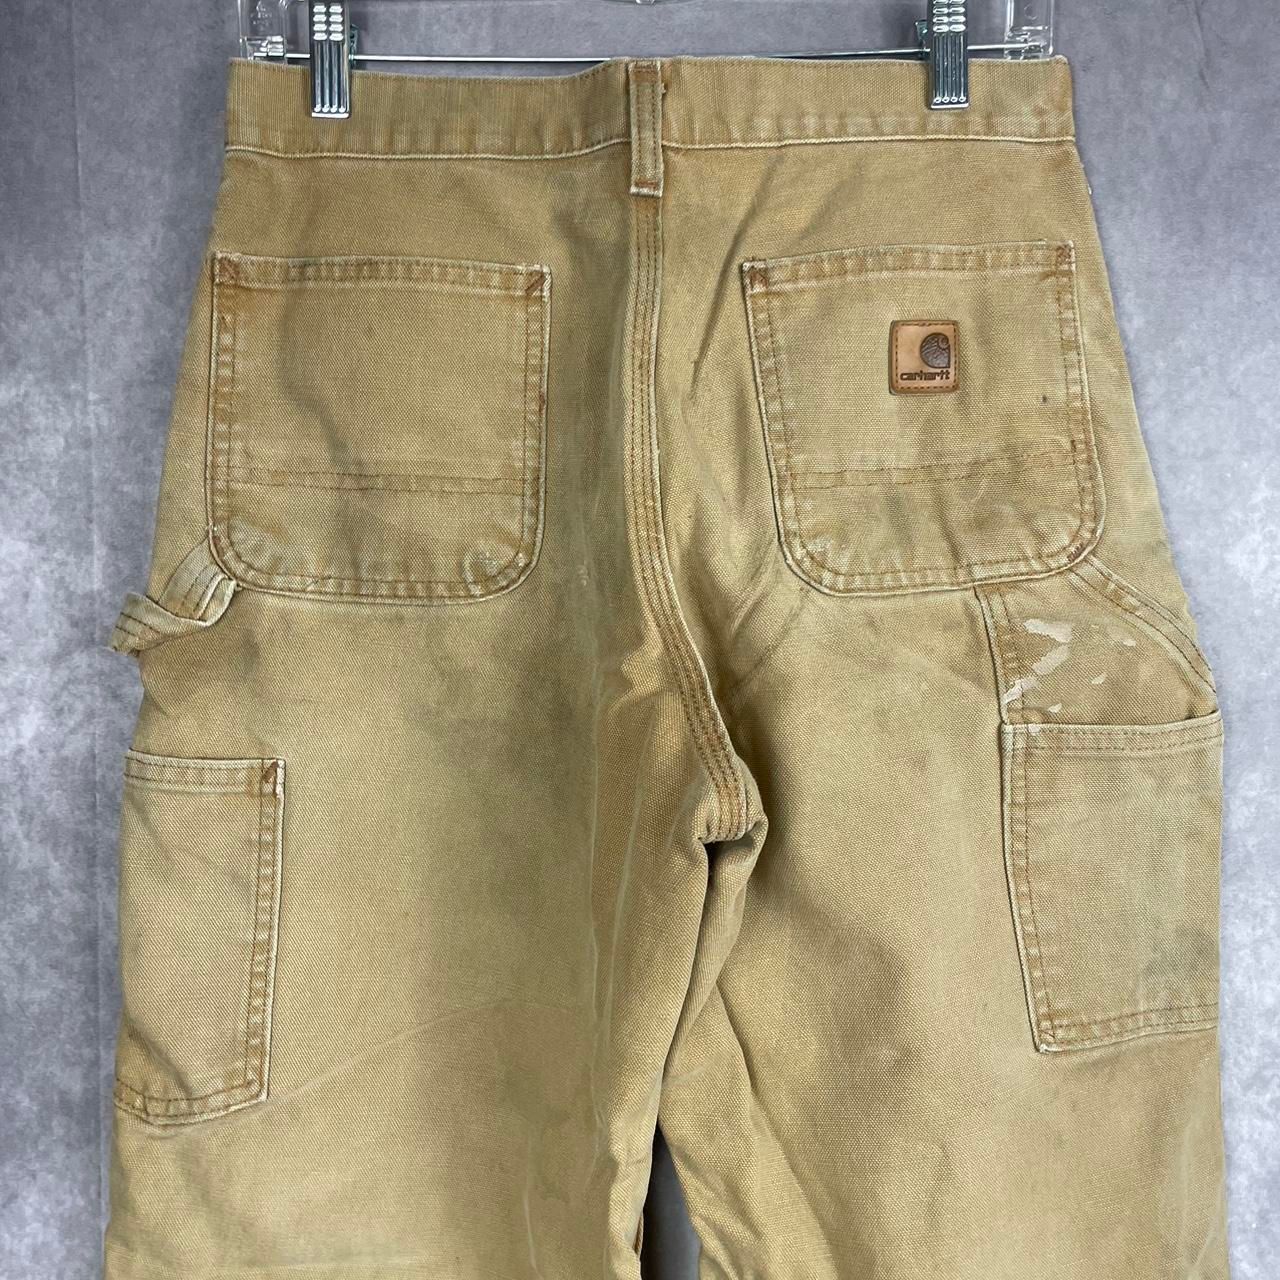 Carhartt Carhartt Dungaree Fit Carpenter Pants Size US 31 - 4 Thumbnail